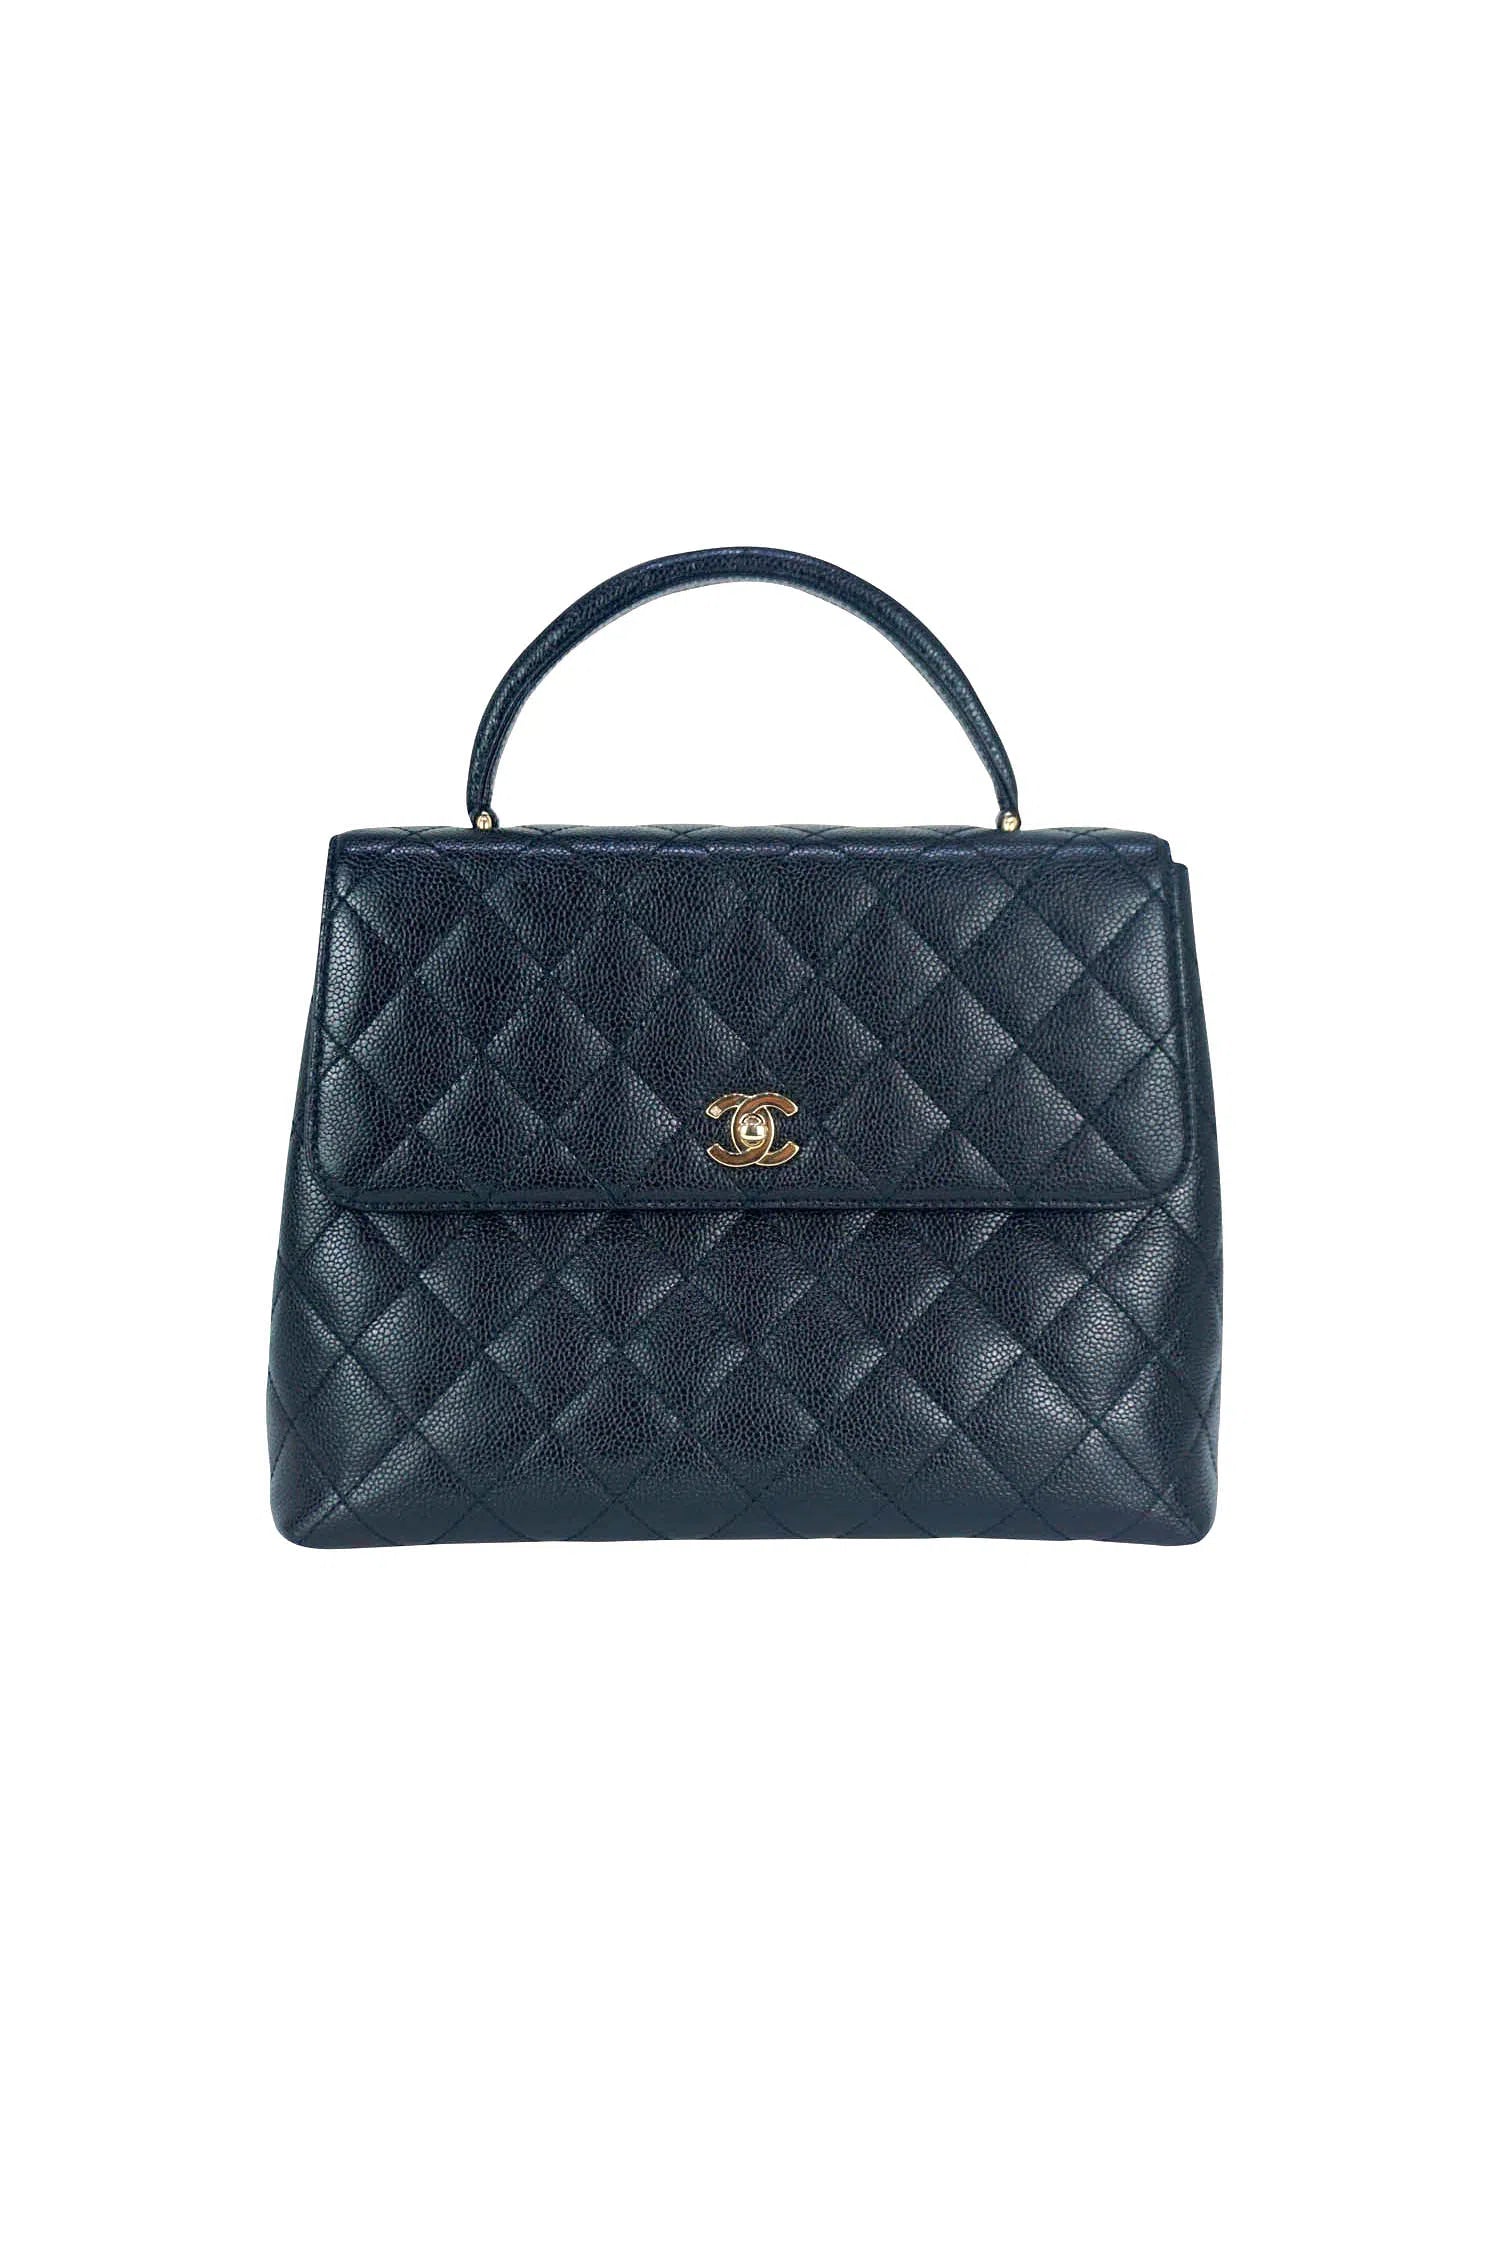 Chanel Vintage Black Caviar Kelly Bag